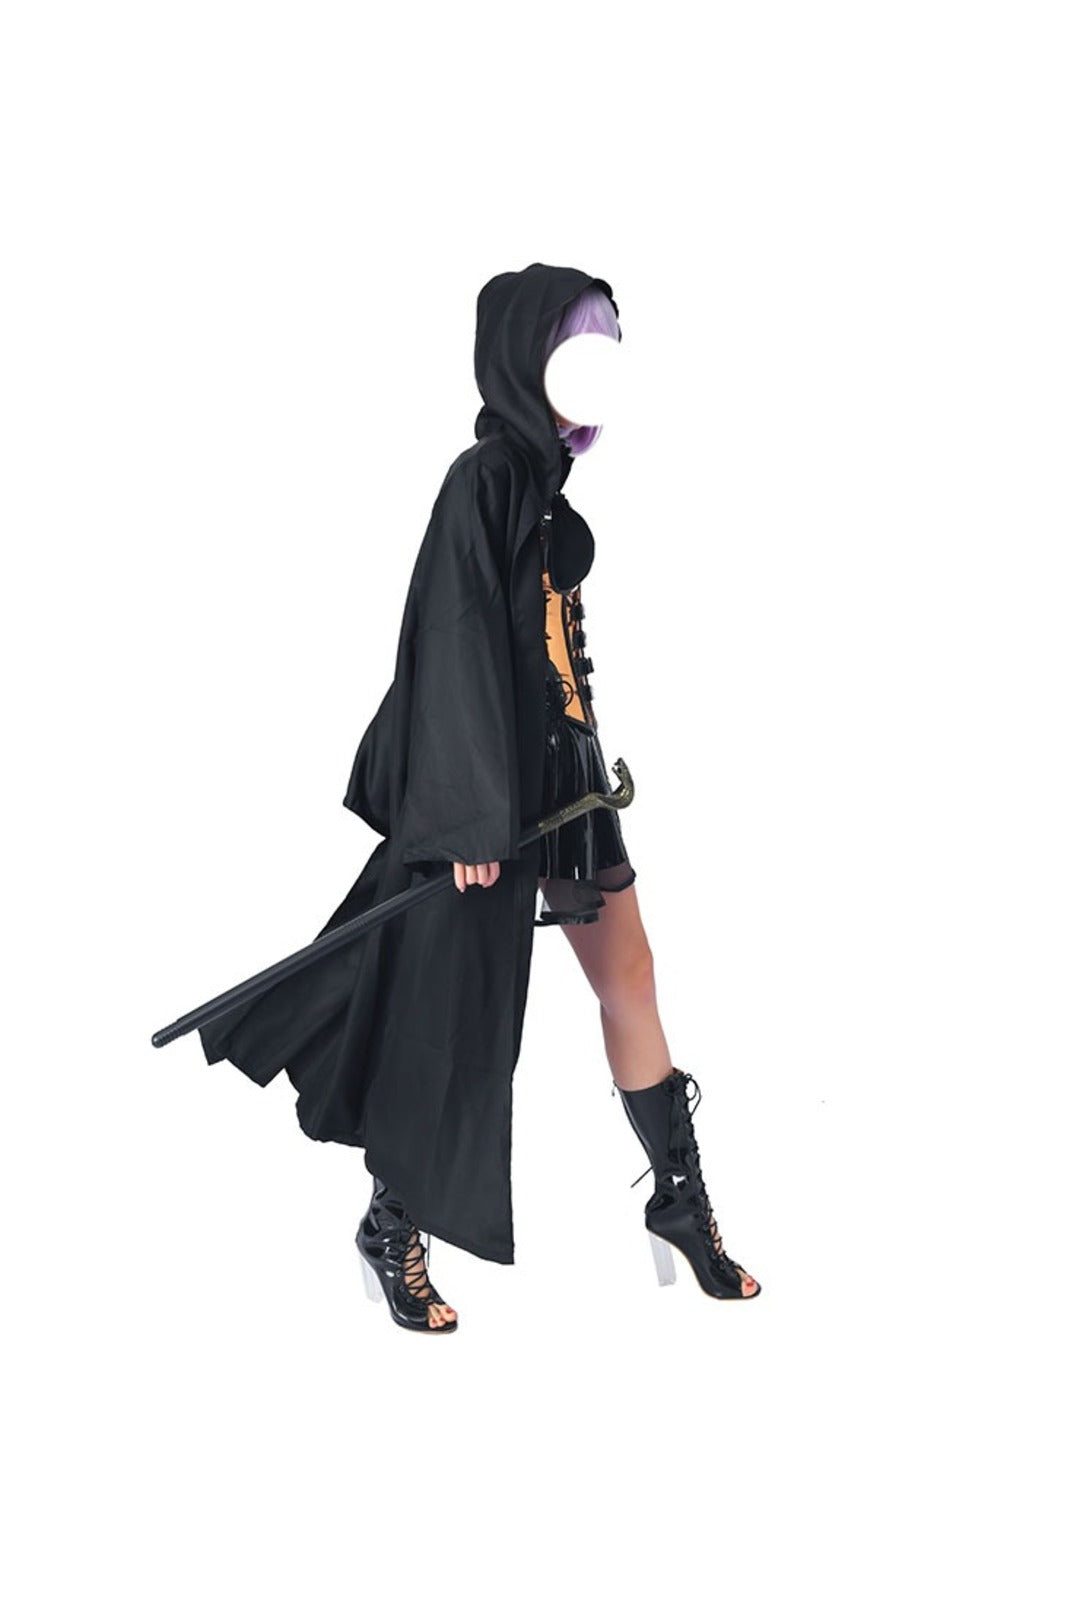 Black Long Hooded Cloak